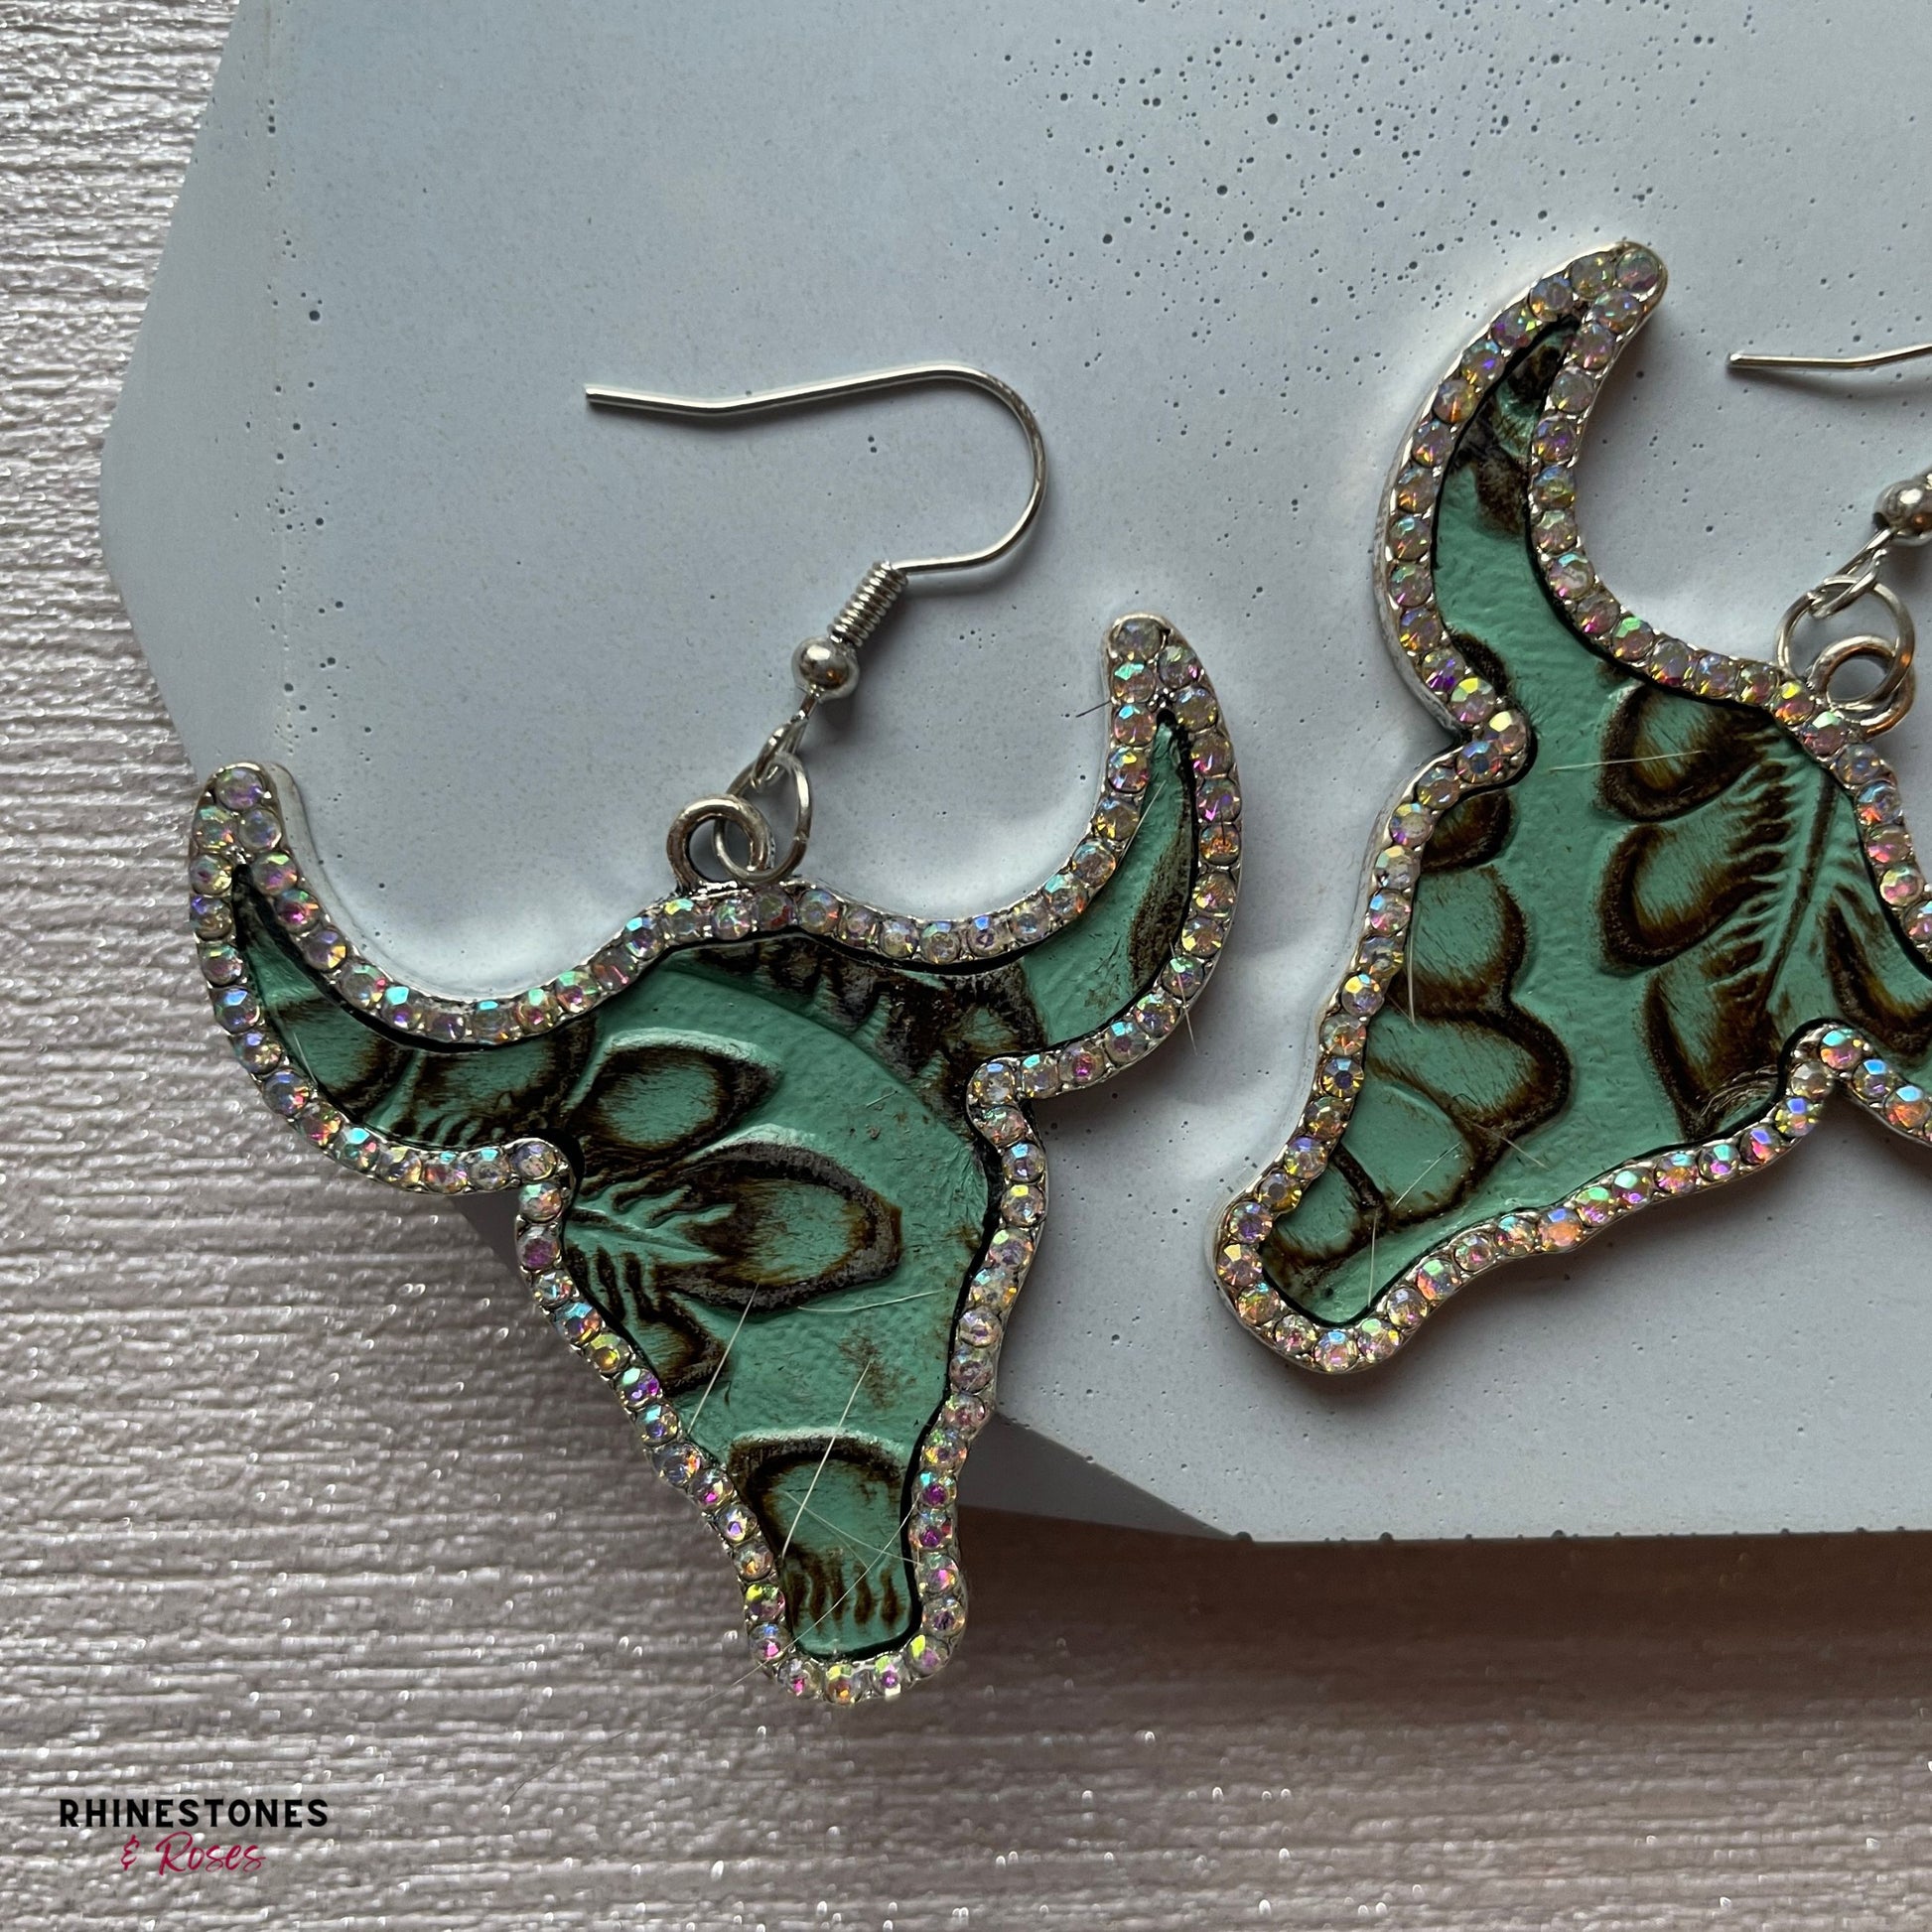 Pretty rhinestone embellished turquoise longhorn earrings